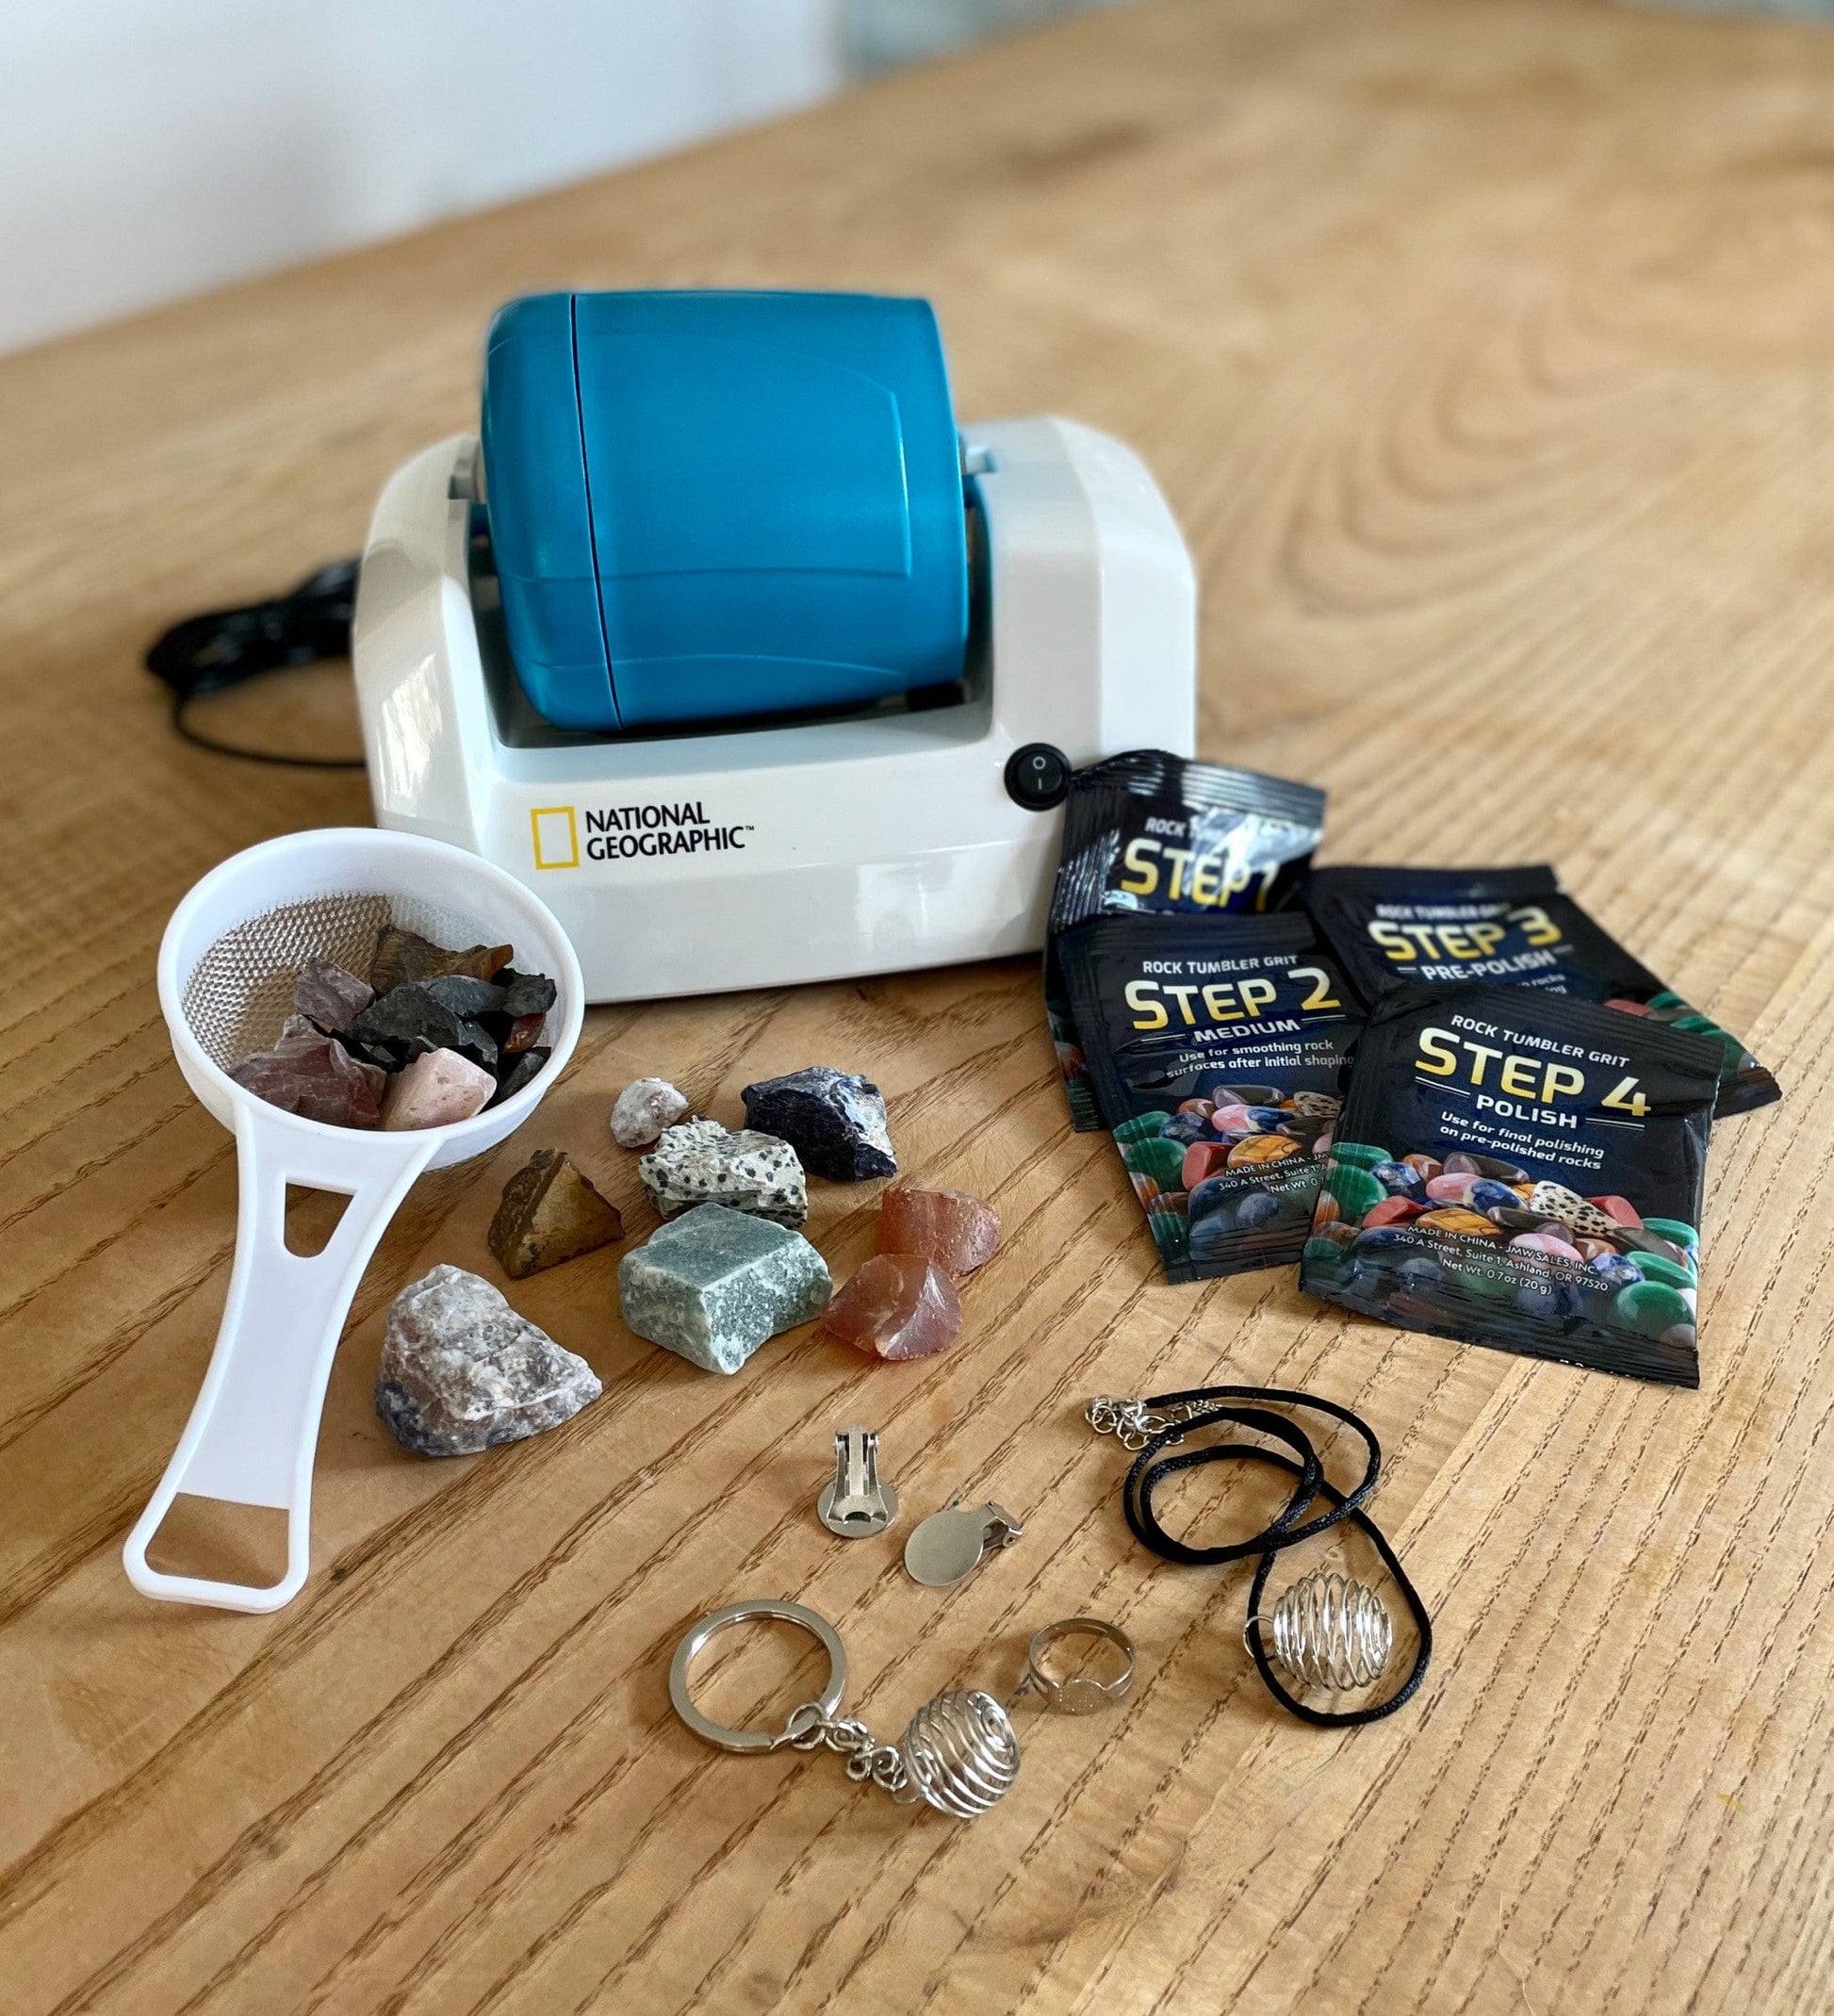 Starter Rock Tumbler Kit Rock Polisher for Kids and Adults